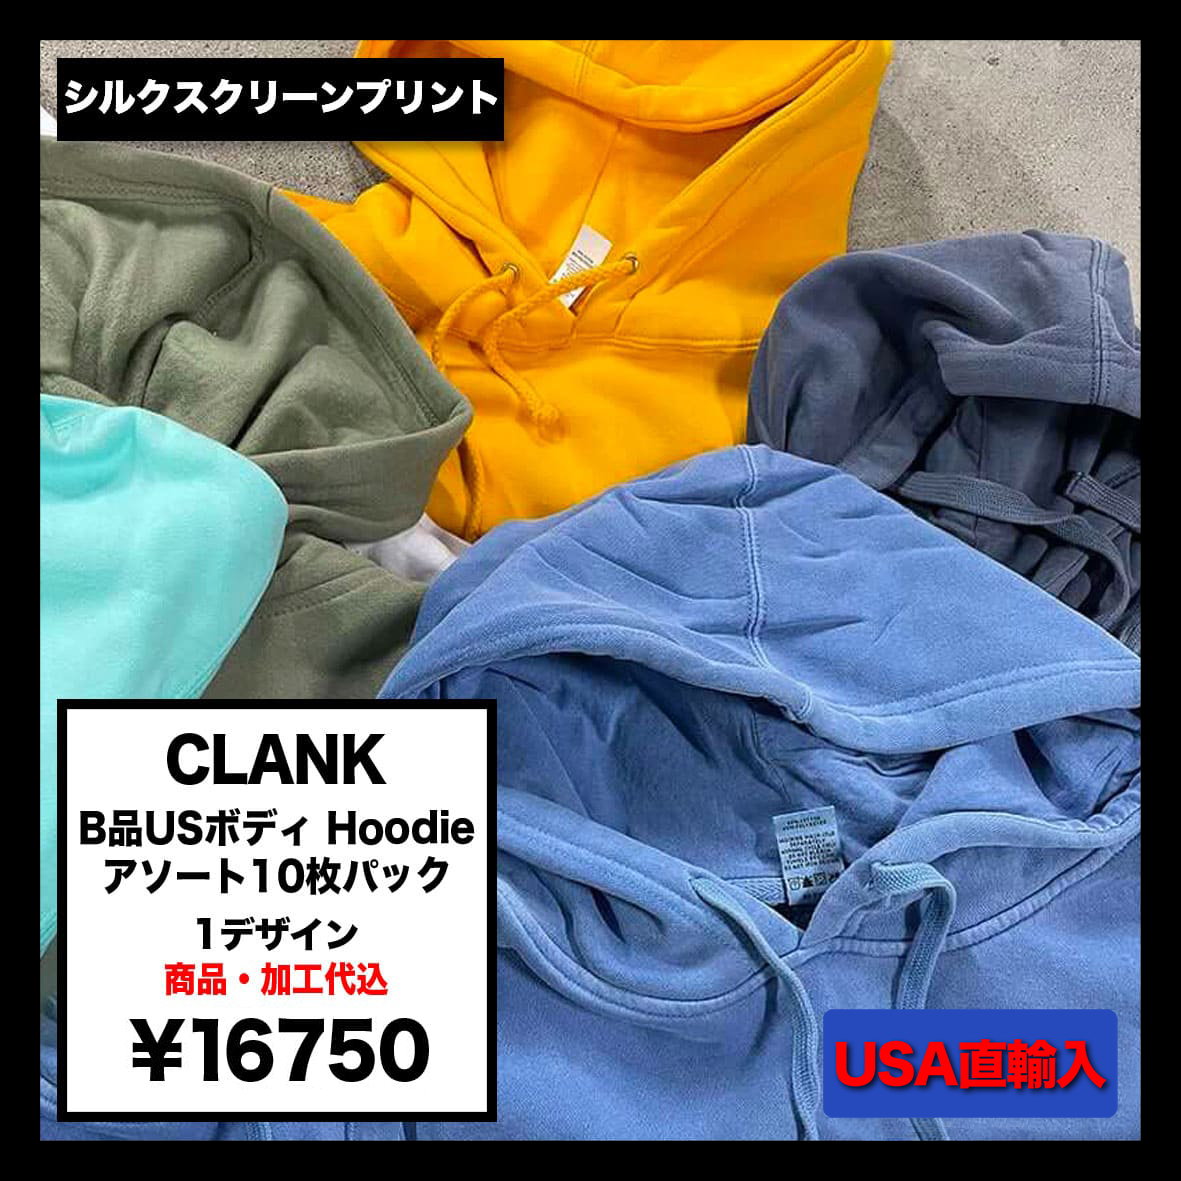 CLANK クランク B品USボディ Hoodie アソート10枚パック (品番CL-BHD)